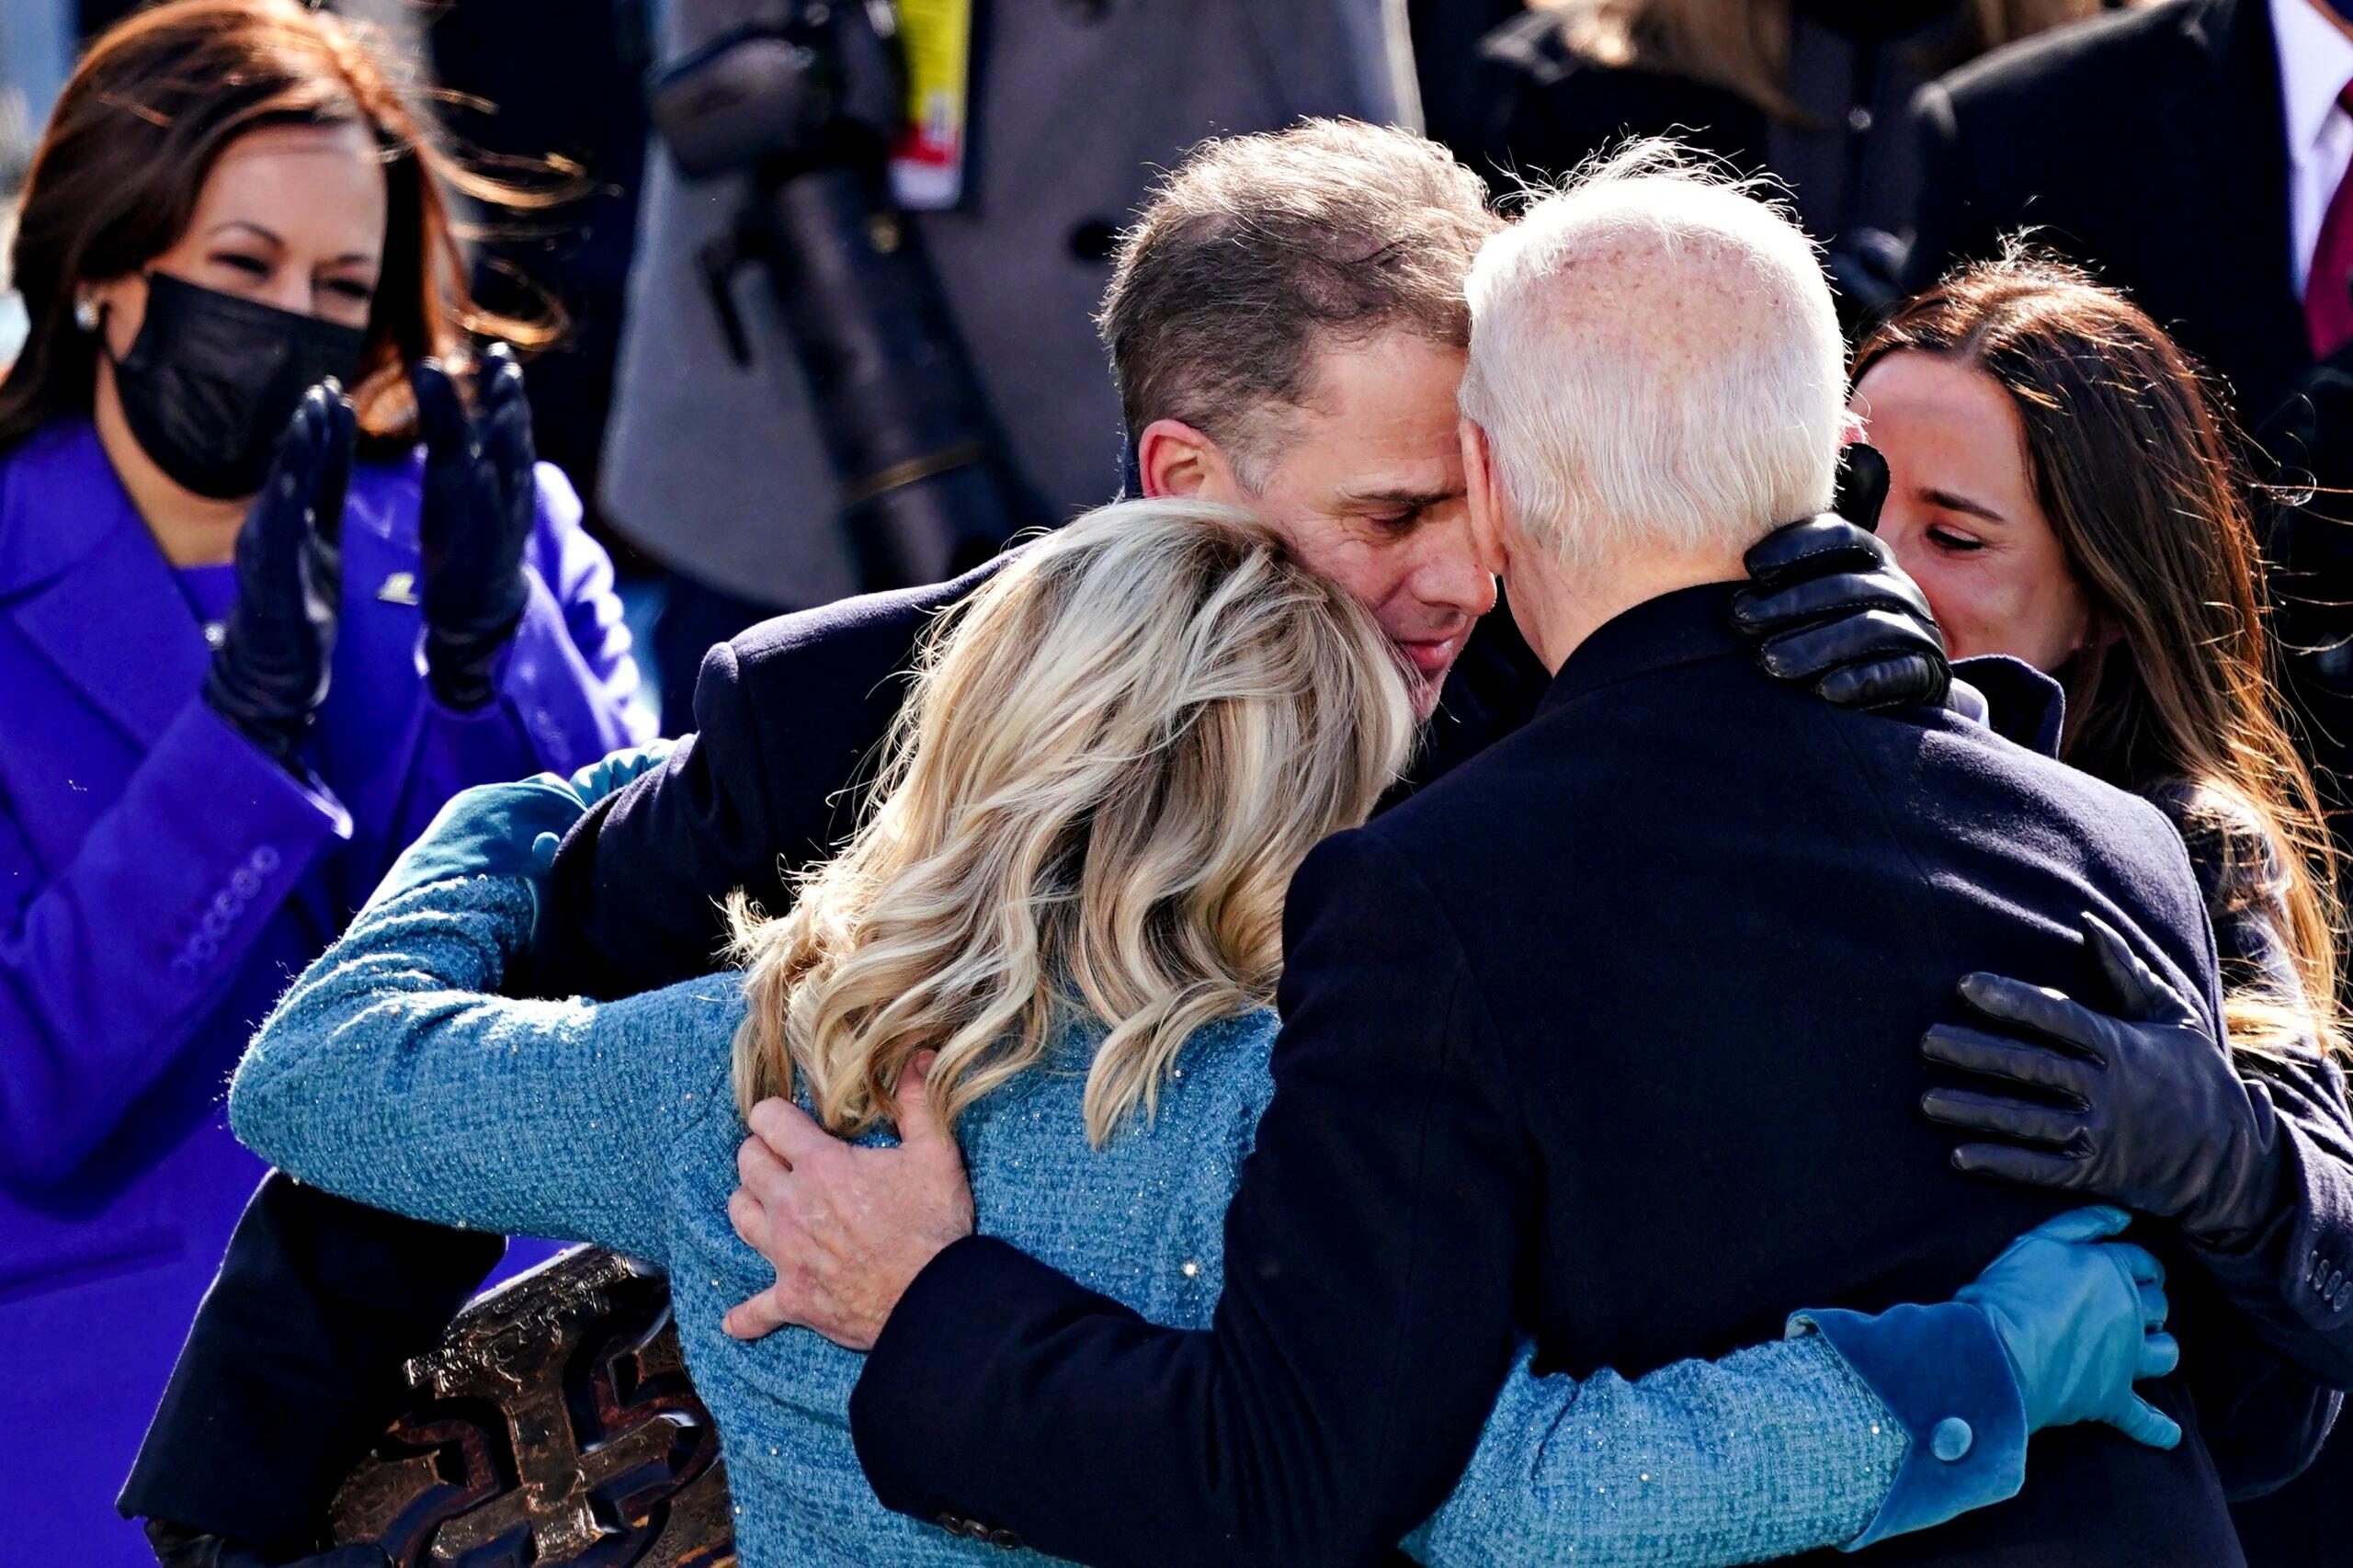 Hunter Biden hugging his family